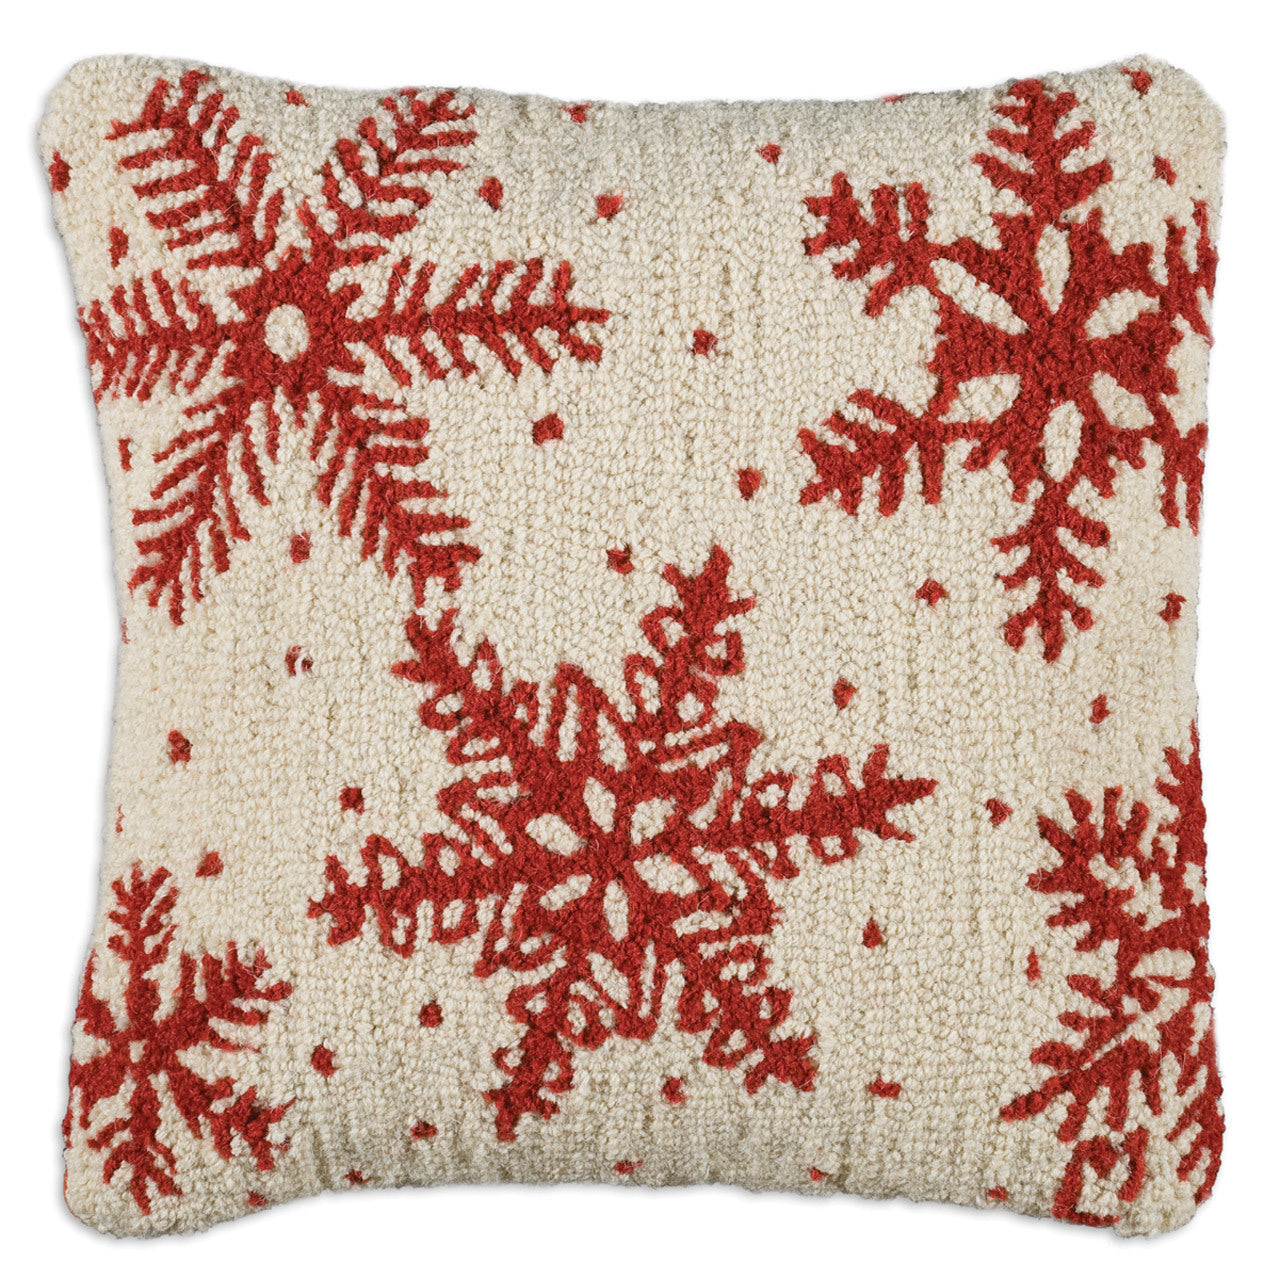 Large Snowflake A Pillow